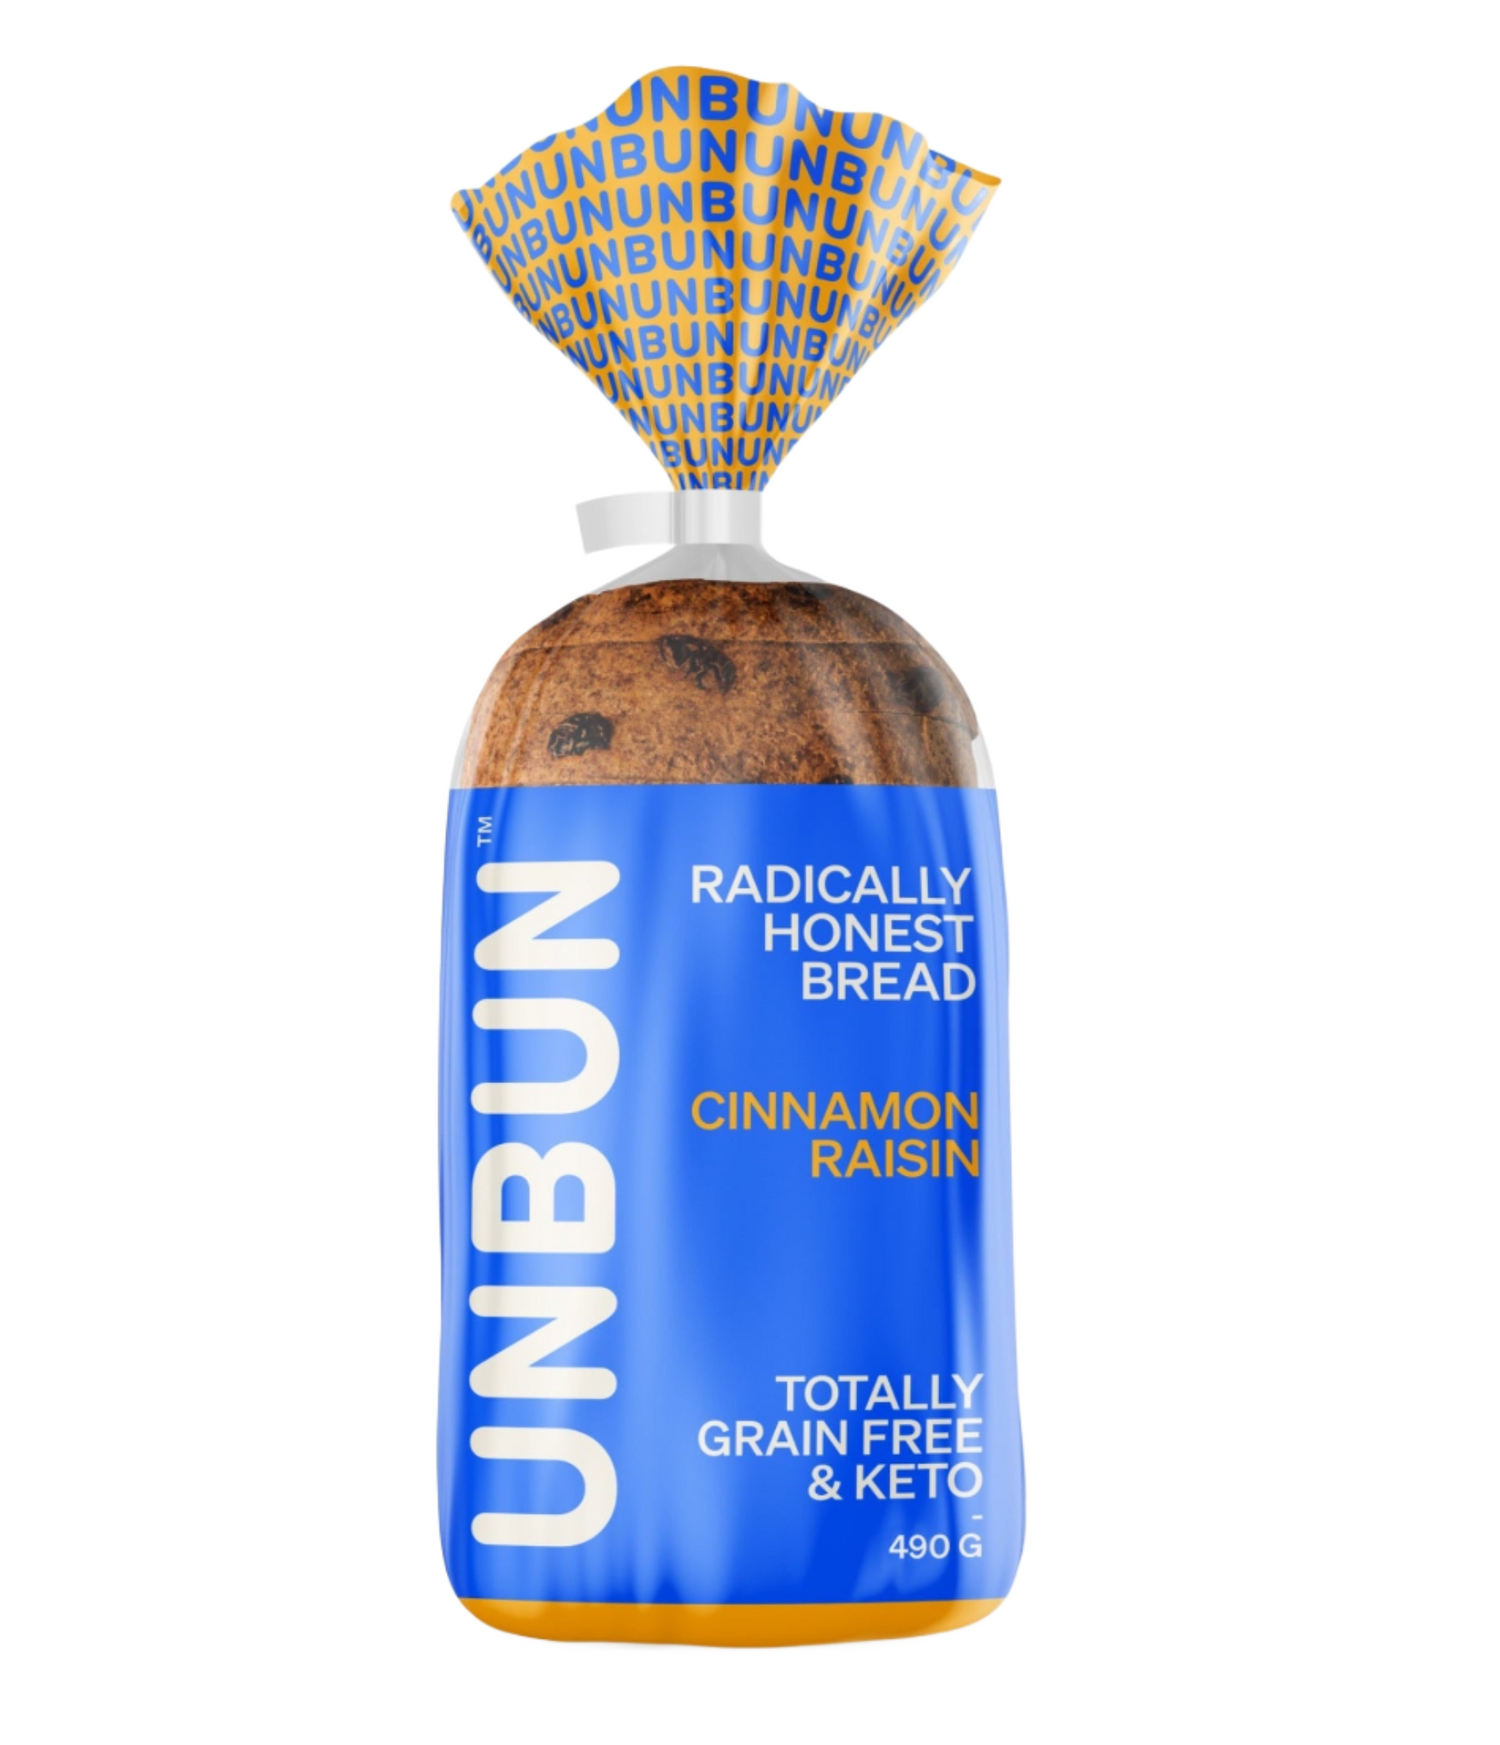 Cinnamon Raisin Bread - 3 Pack